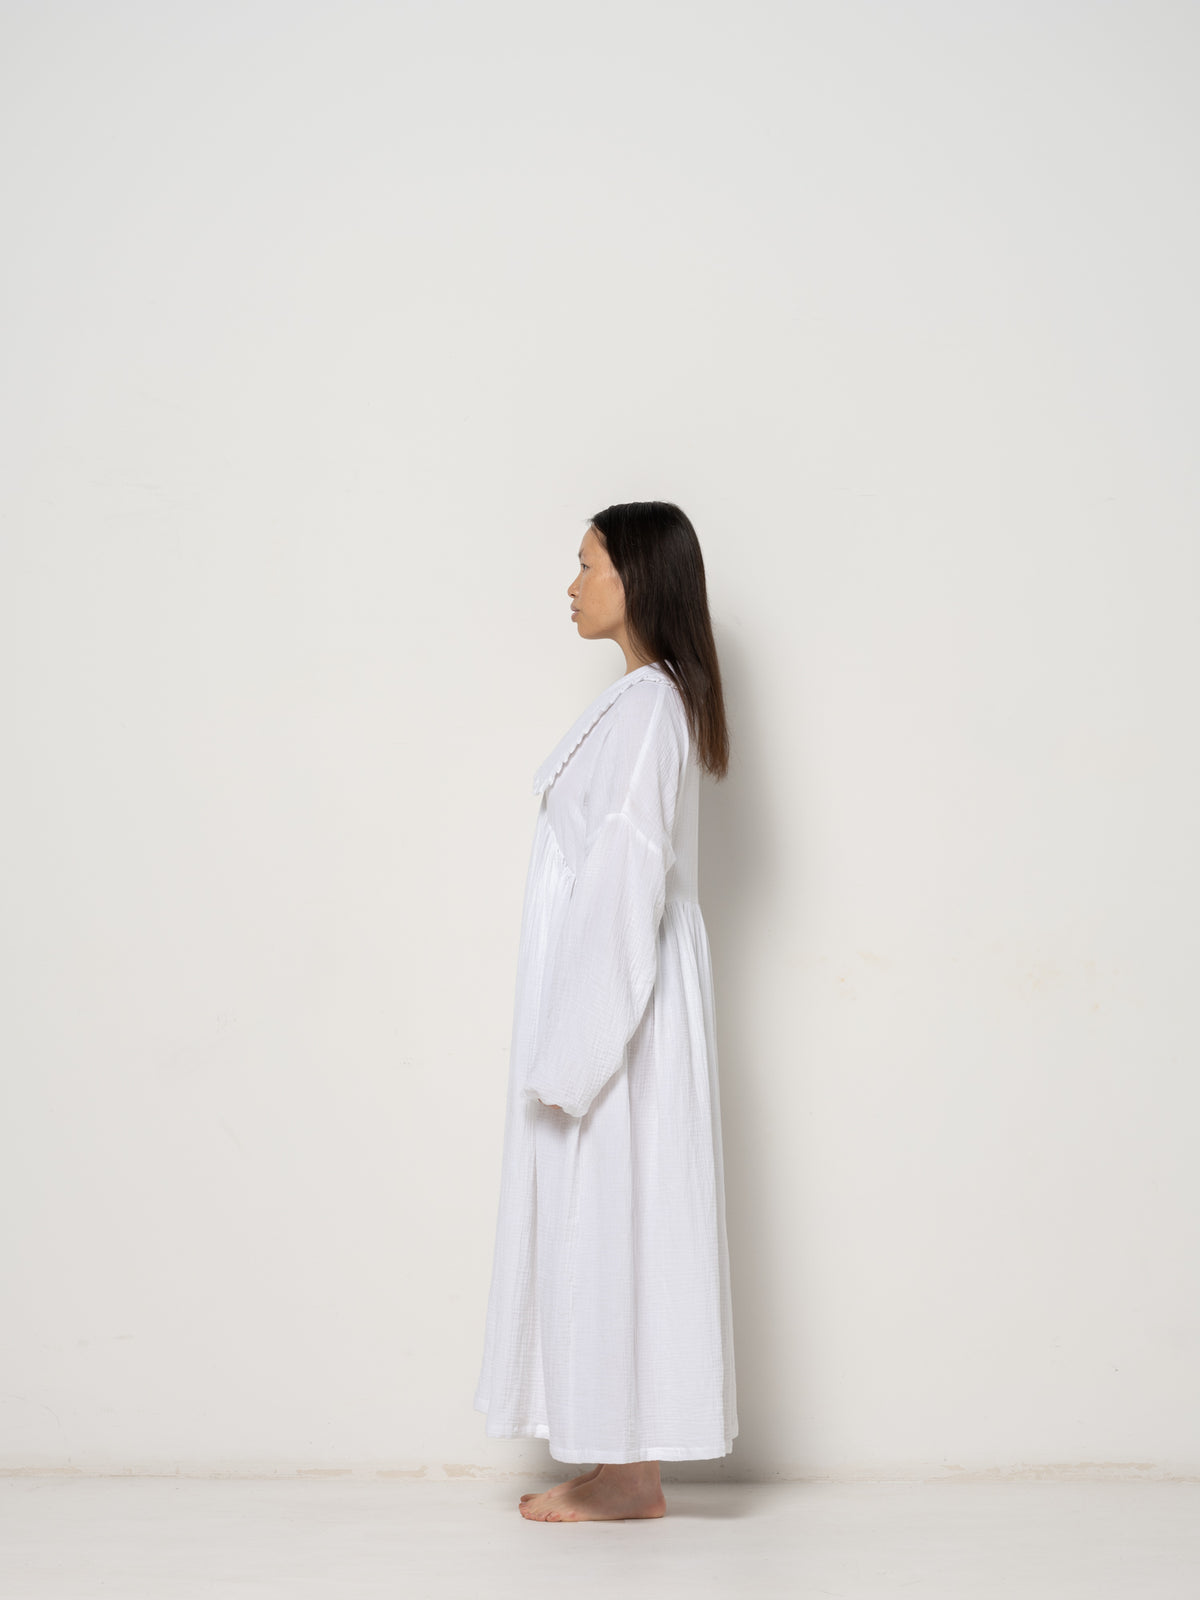 Dress Maribél - White Cotton Gauze